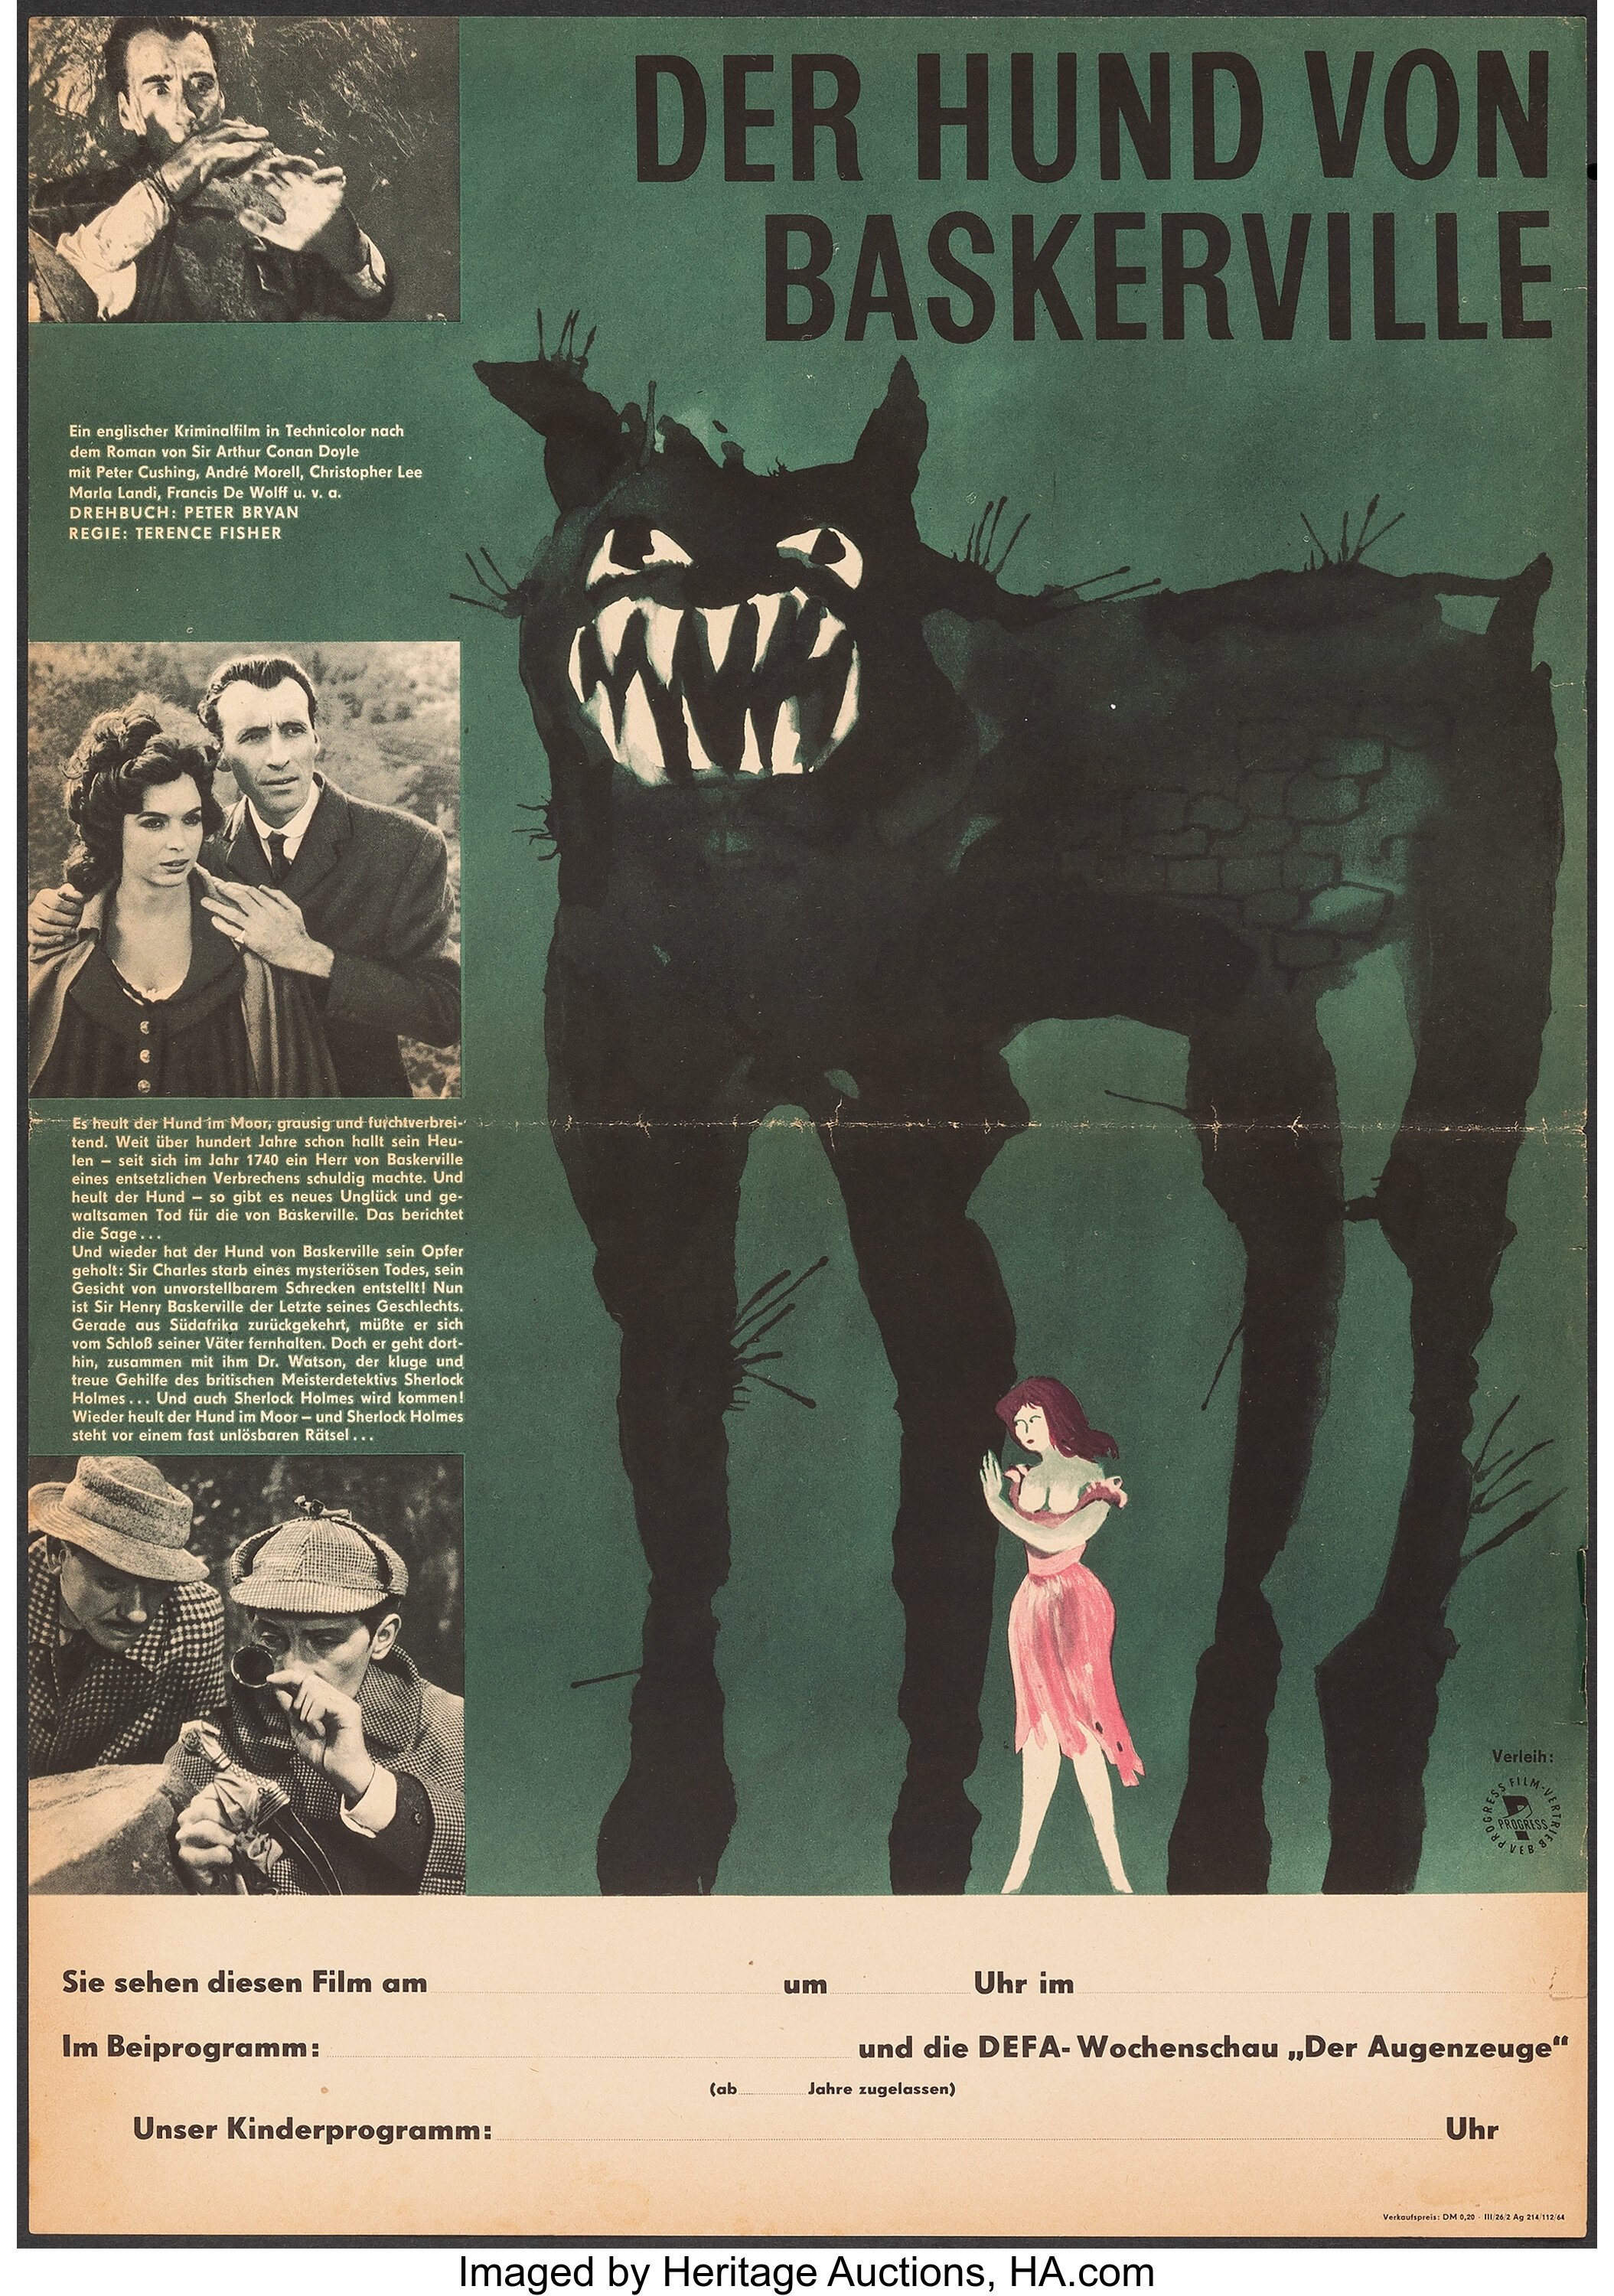 Hound of Baskervilles Film Verlieh, 1964). | Lot #53185 | Heritage Auctions